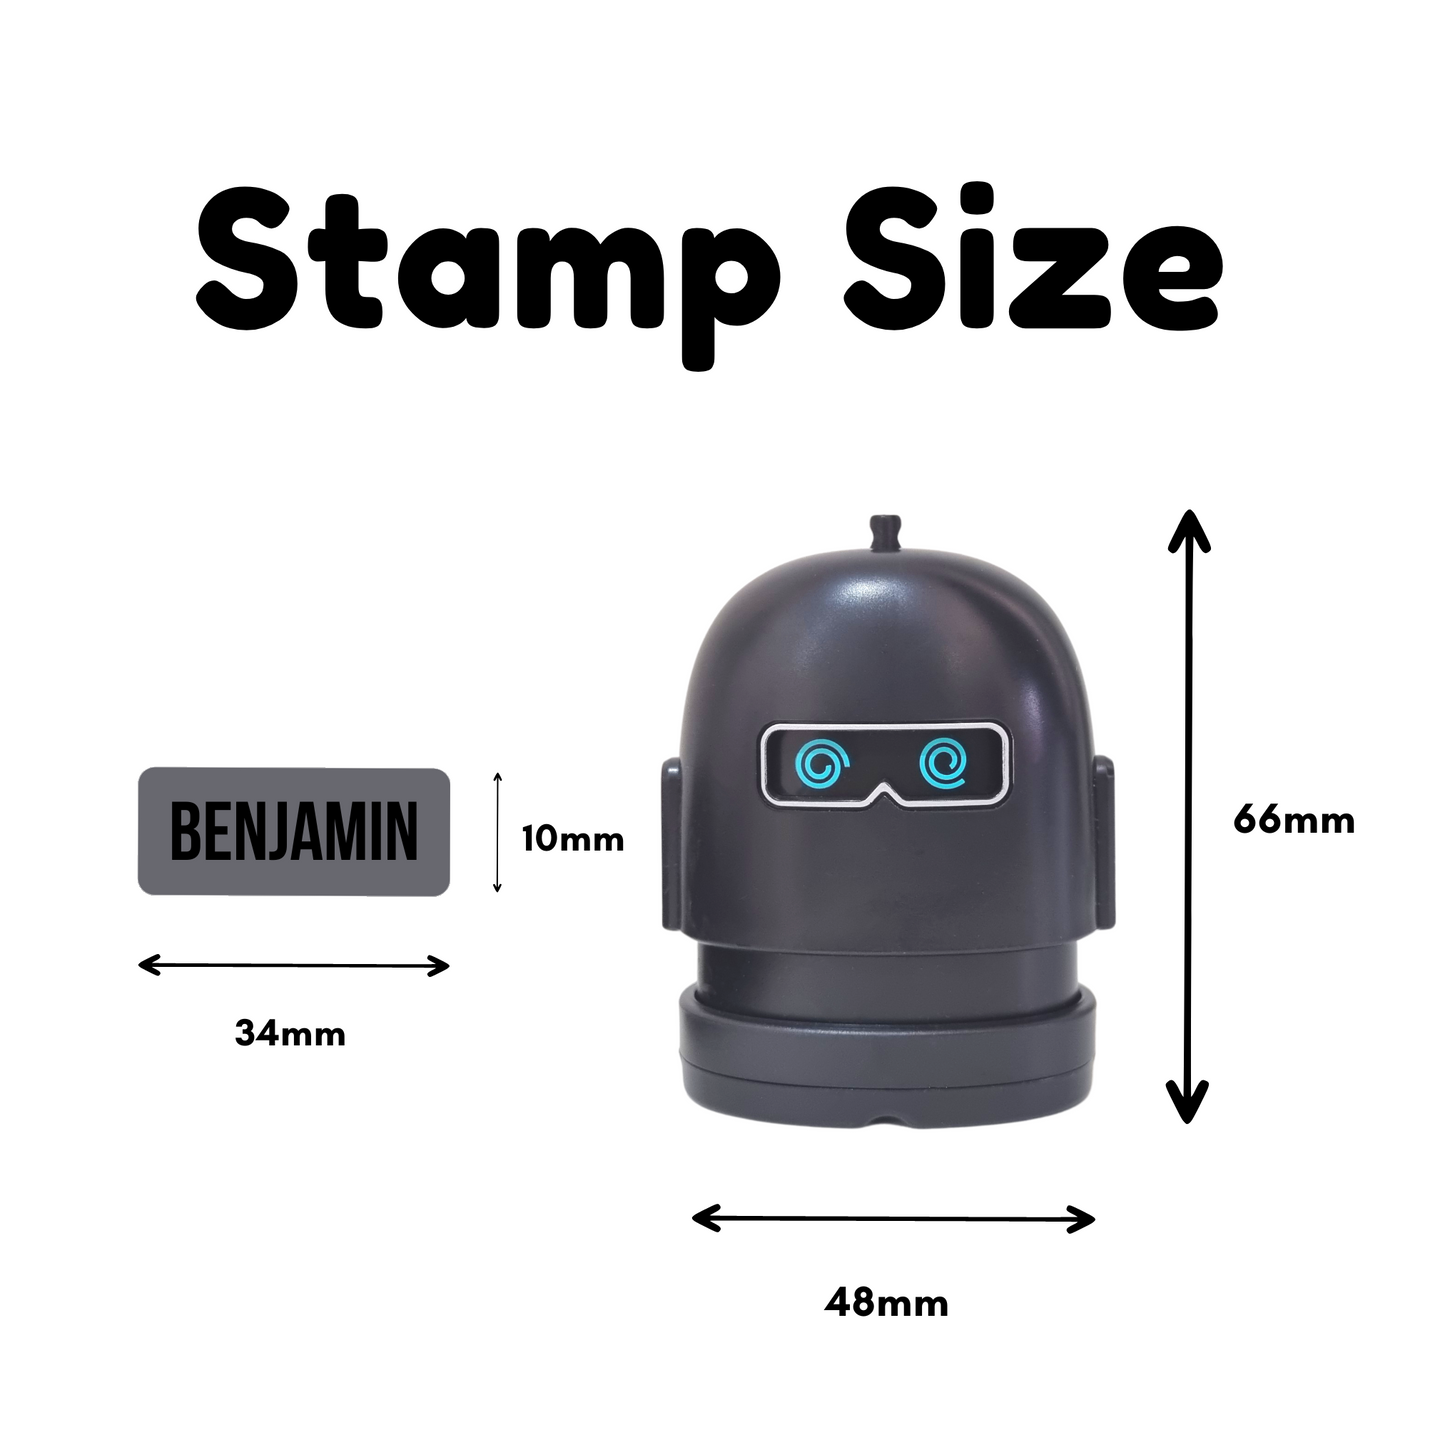 Robot Name Stamps